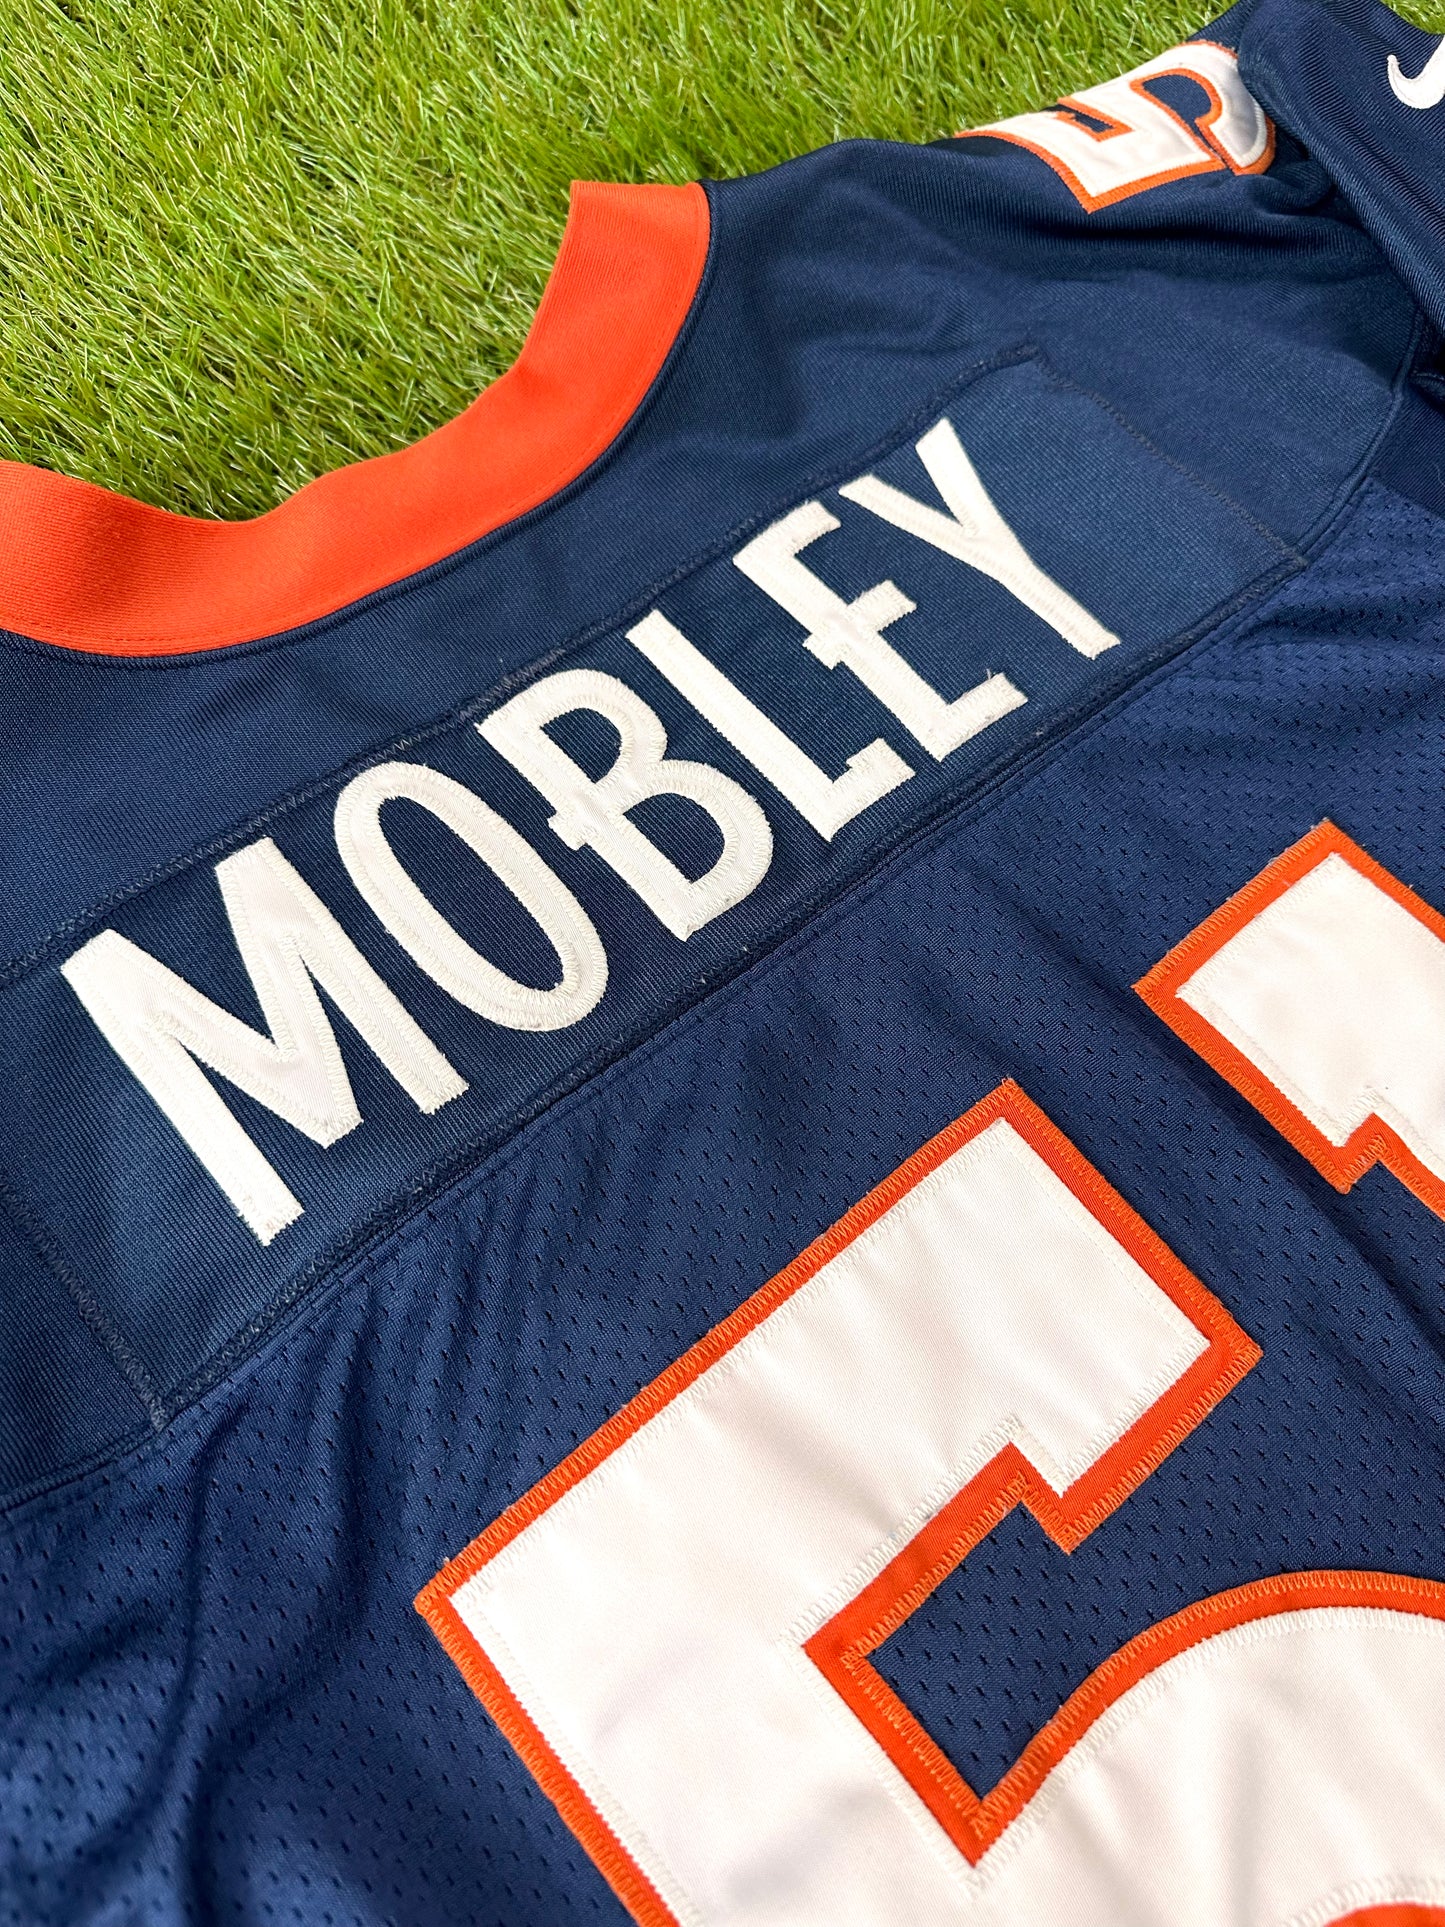 Denver Broncos John Mobley 1997-2000 NFL Football Jersey (52/XXL)